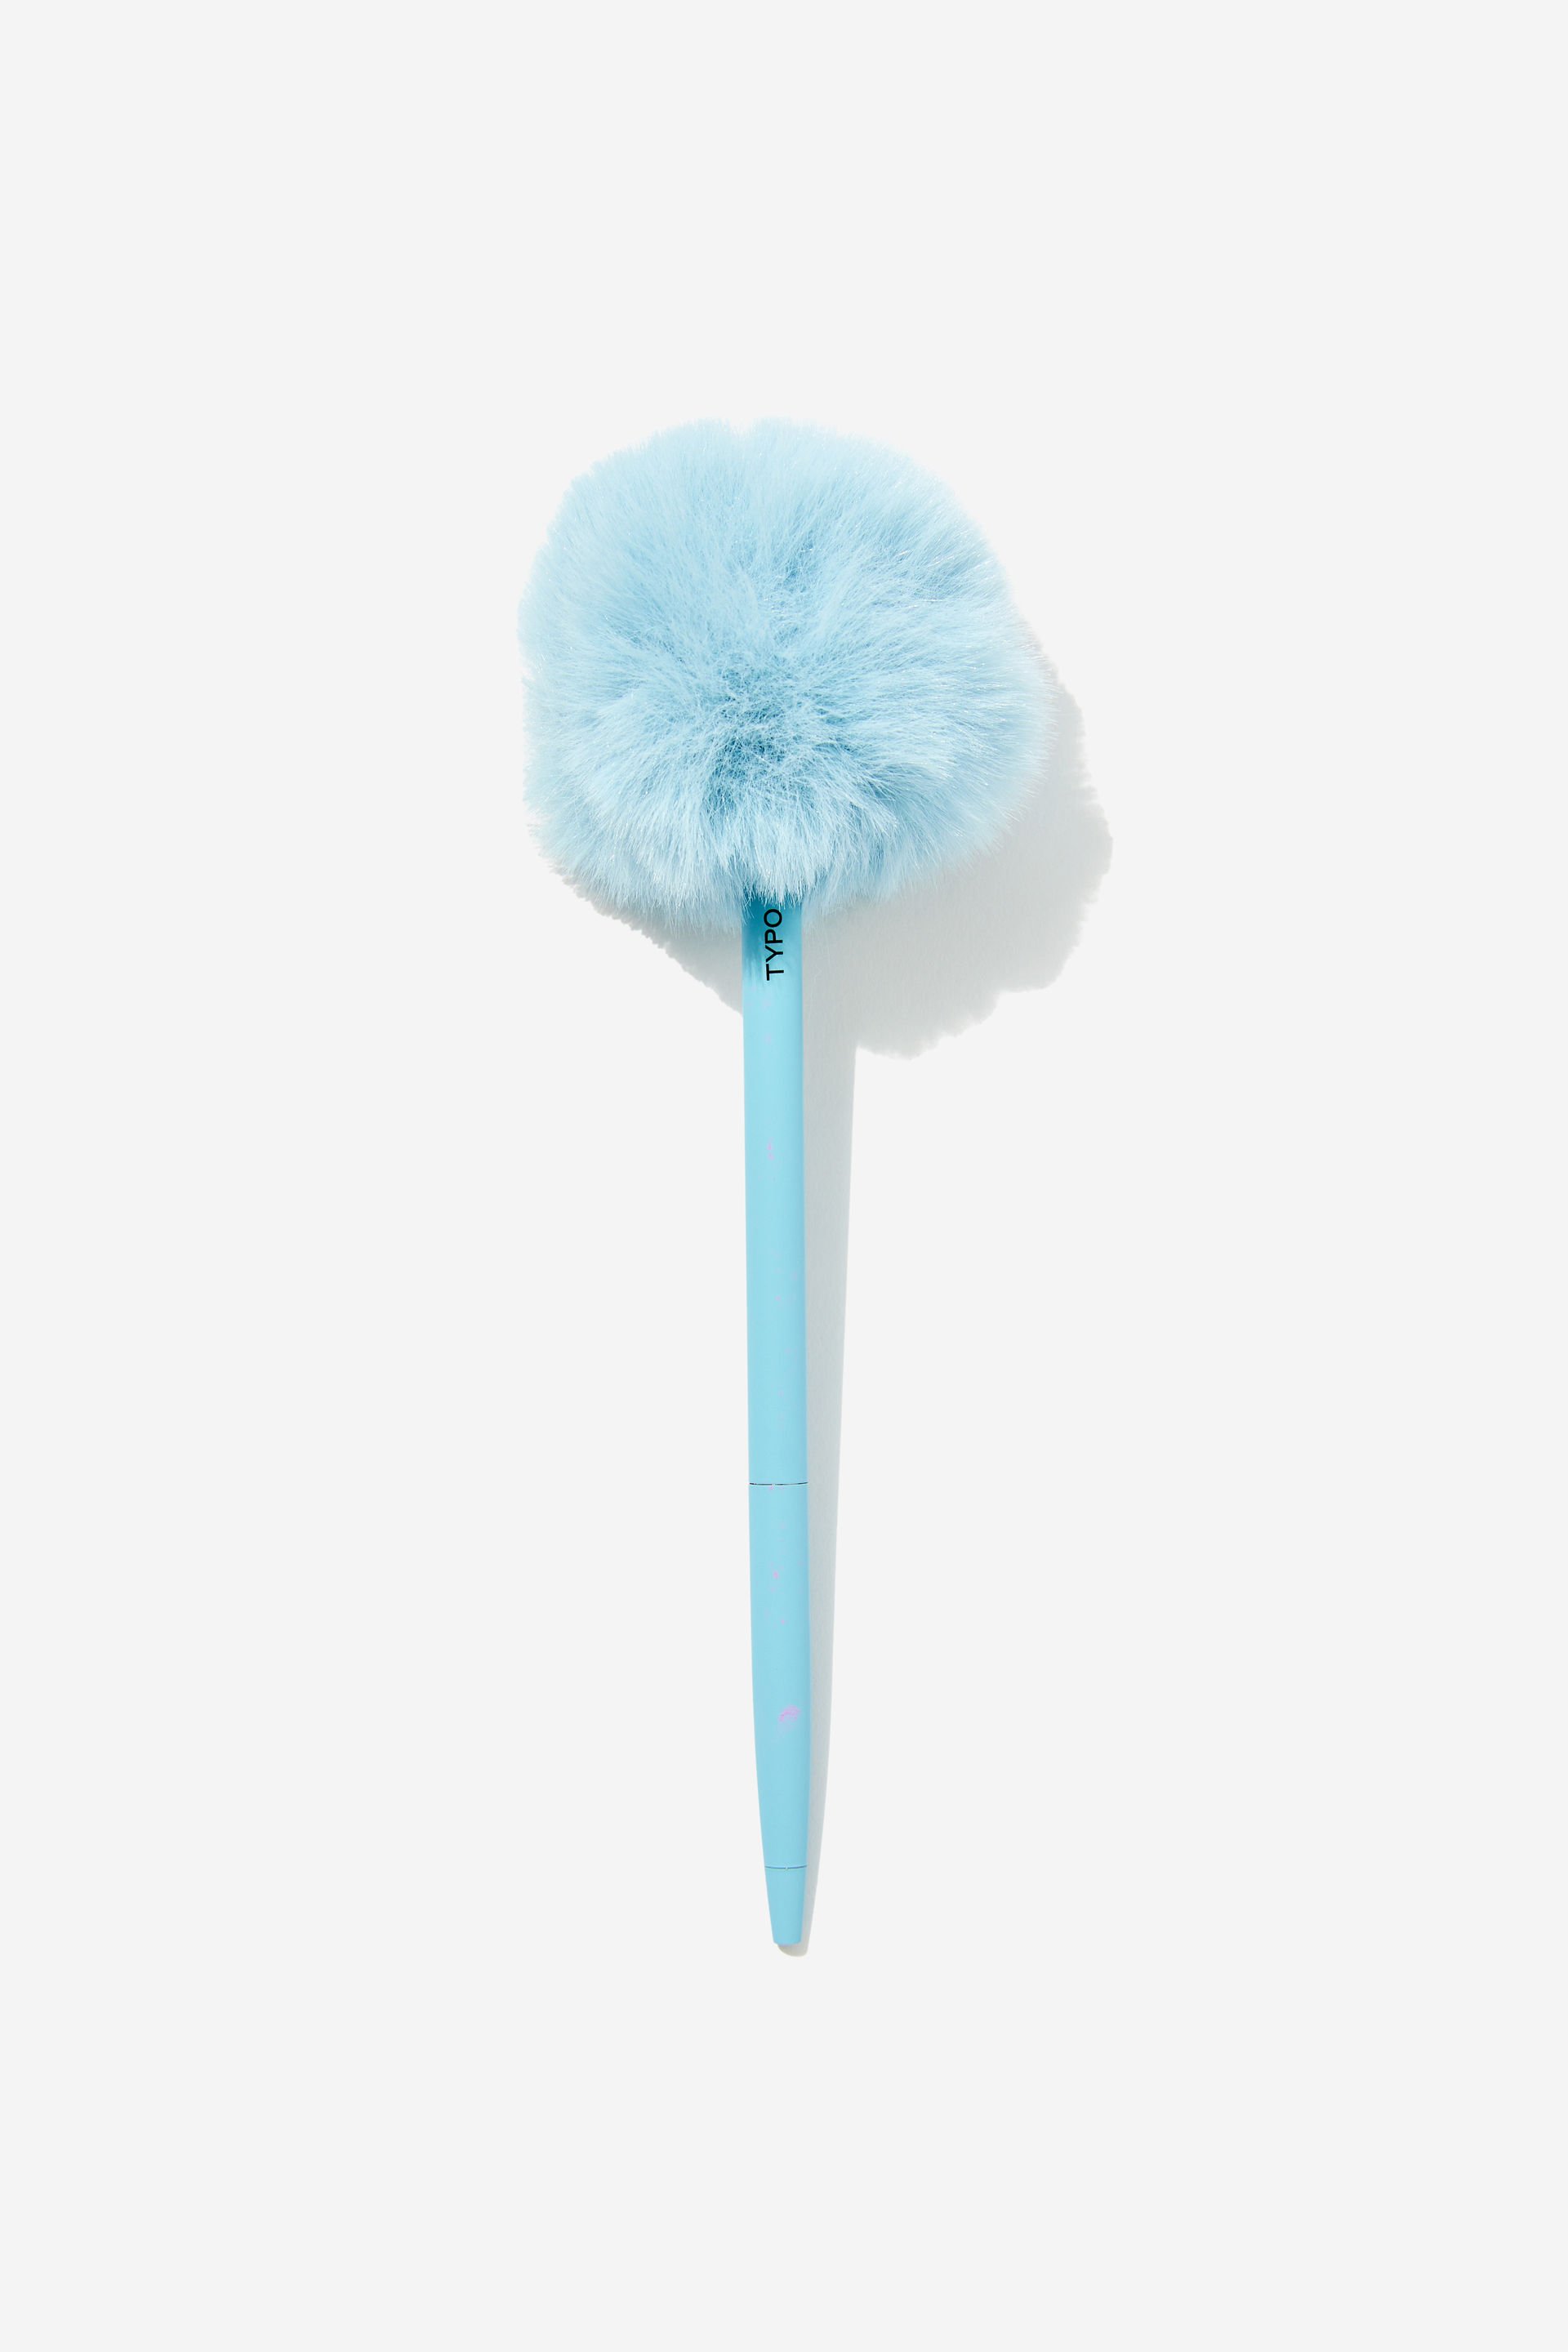 Typo - Fluffy Pen - Arctic blue